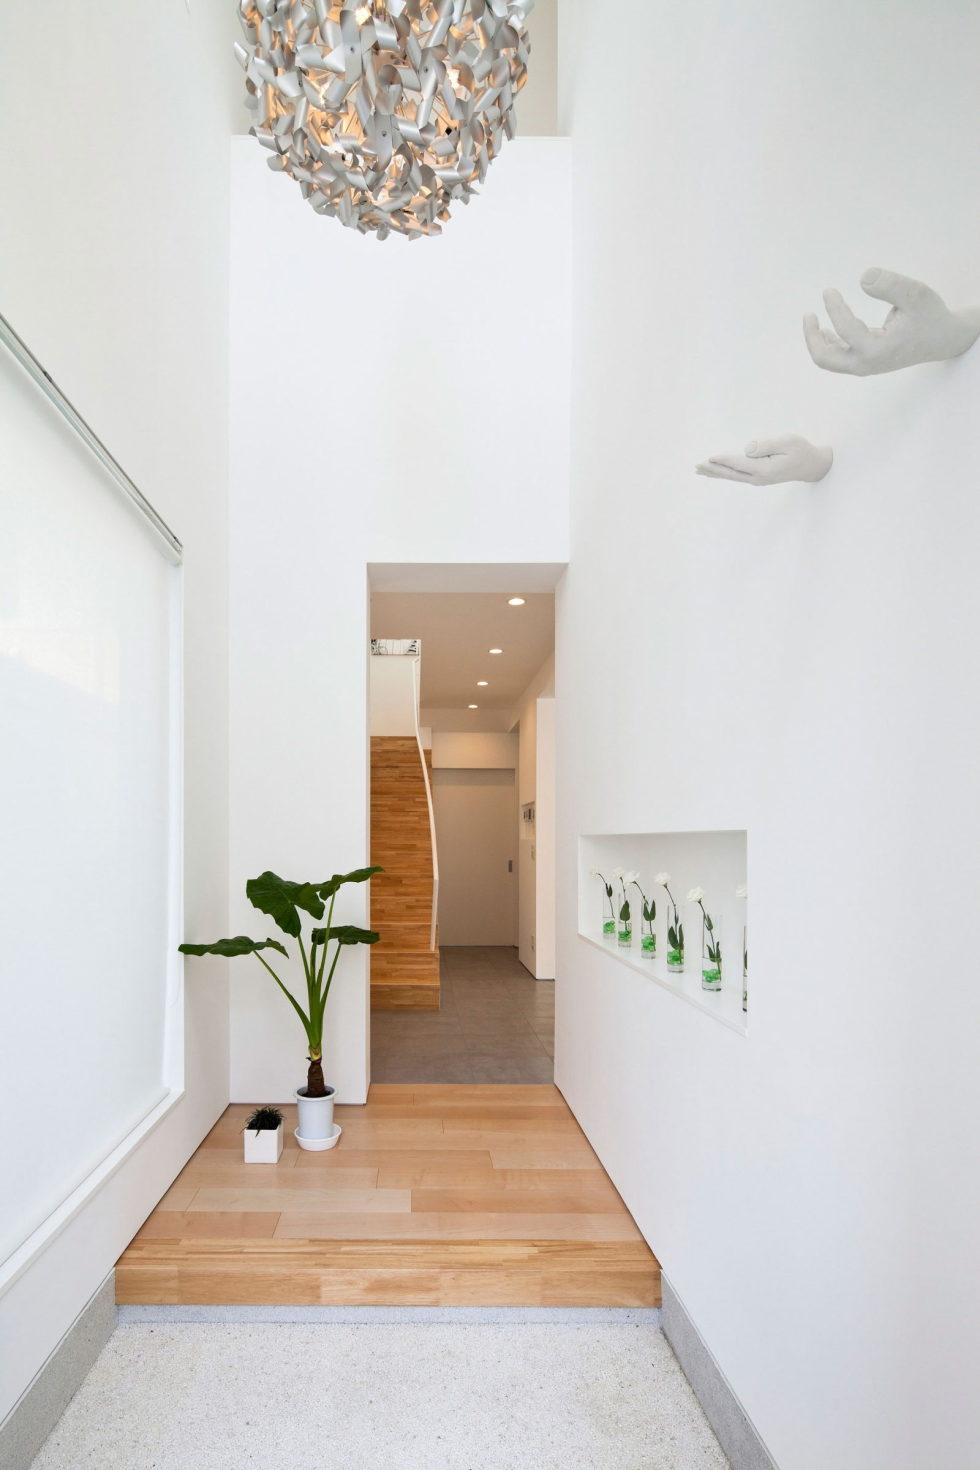 Zen Design House From RCK Design Studio In Japan 3